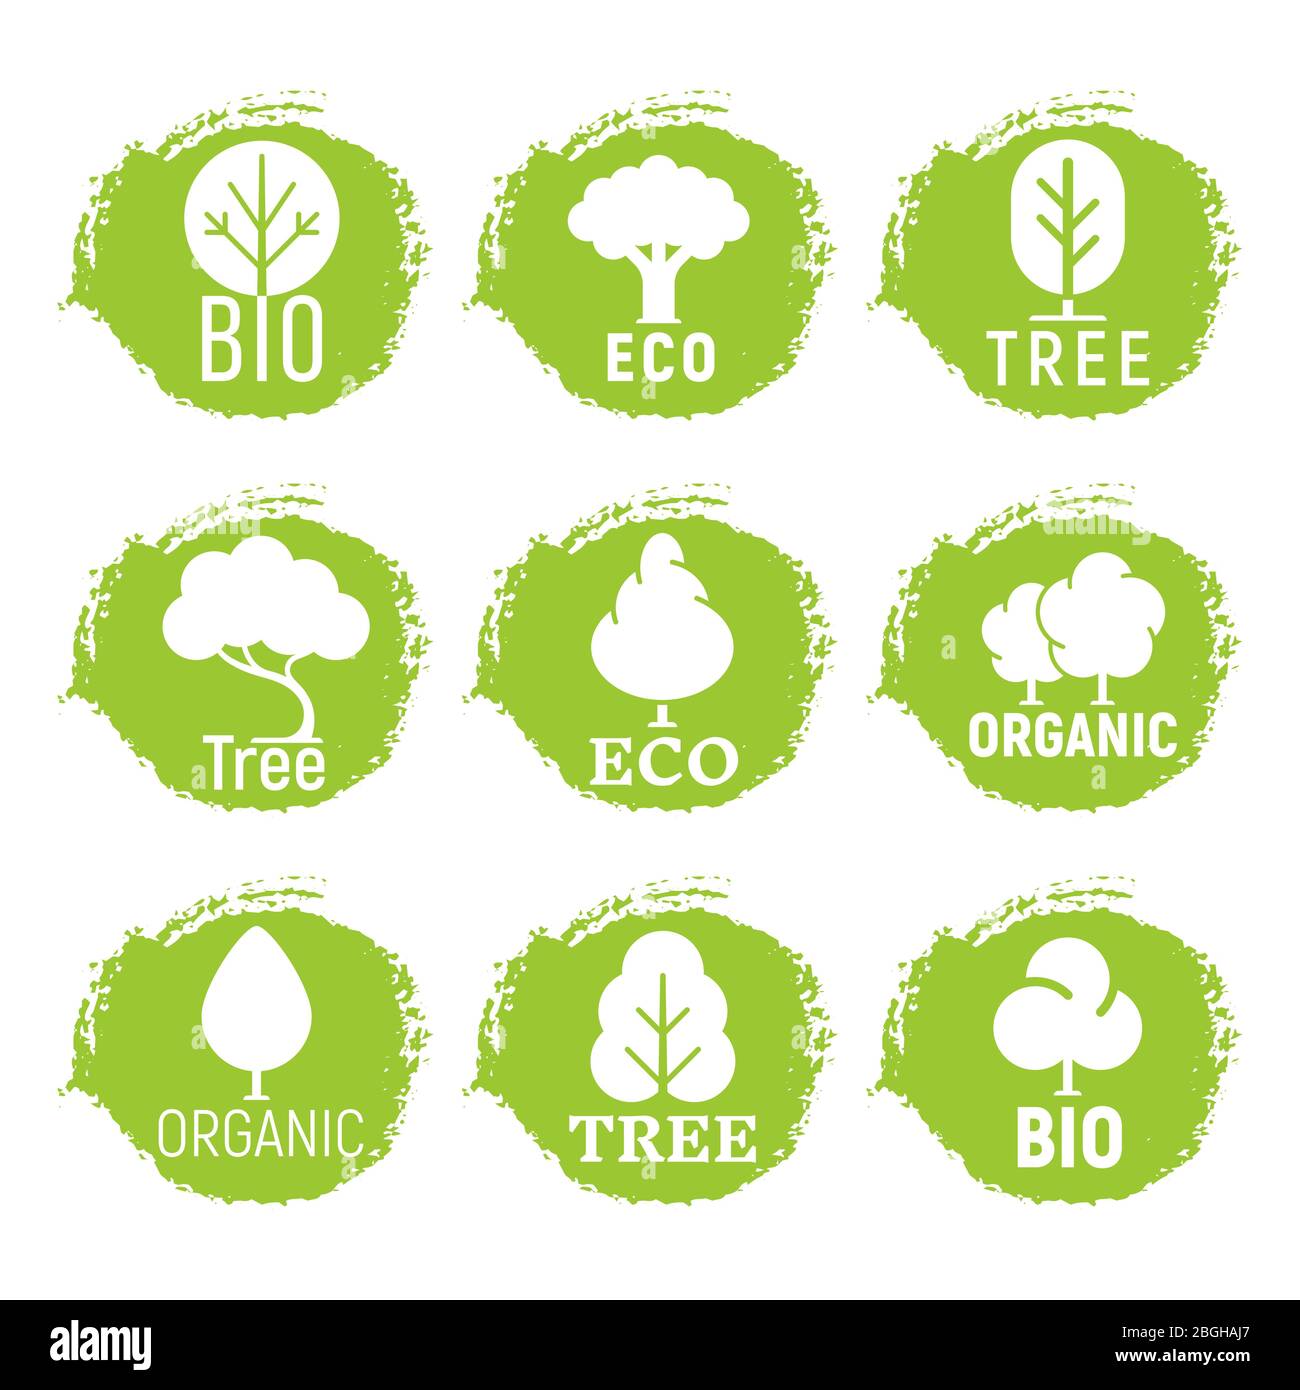 Eco friendly, organic, tree logos on green grunge background. Vector nature ecology symbol of set illustration Stock Vector